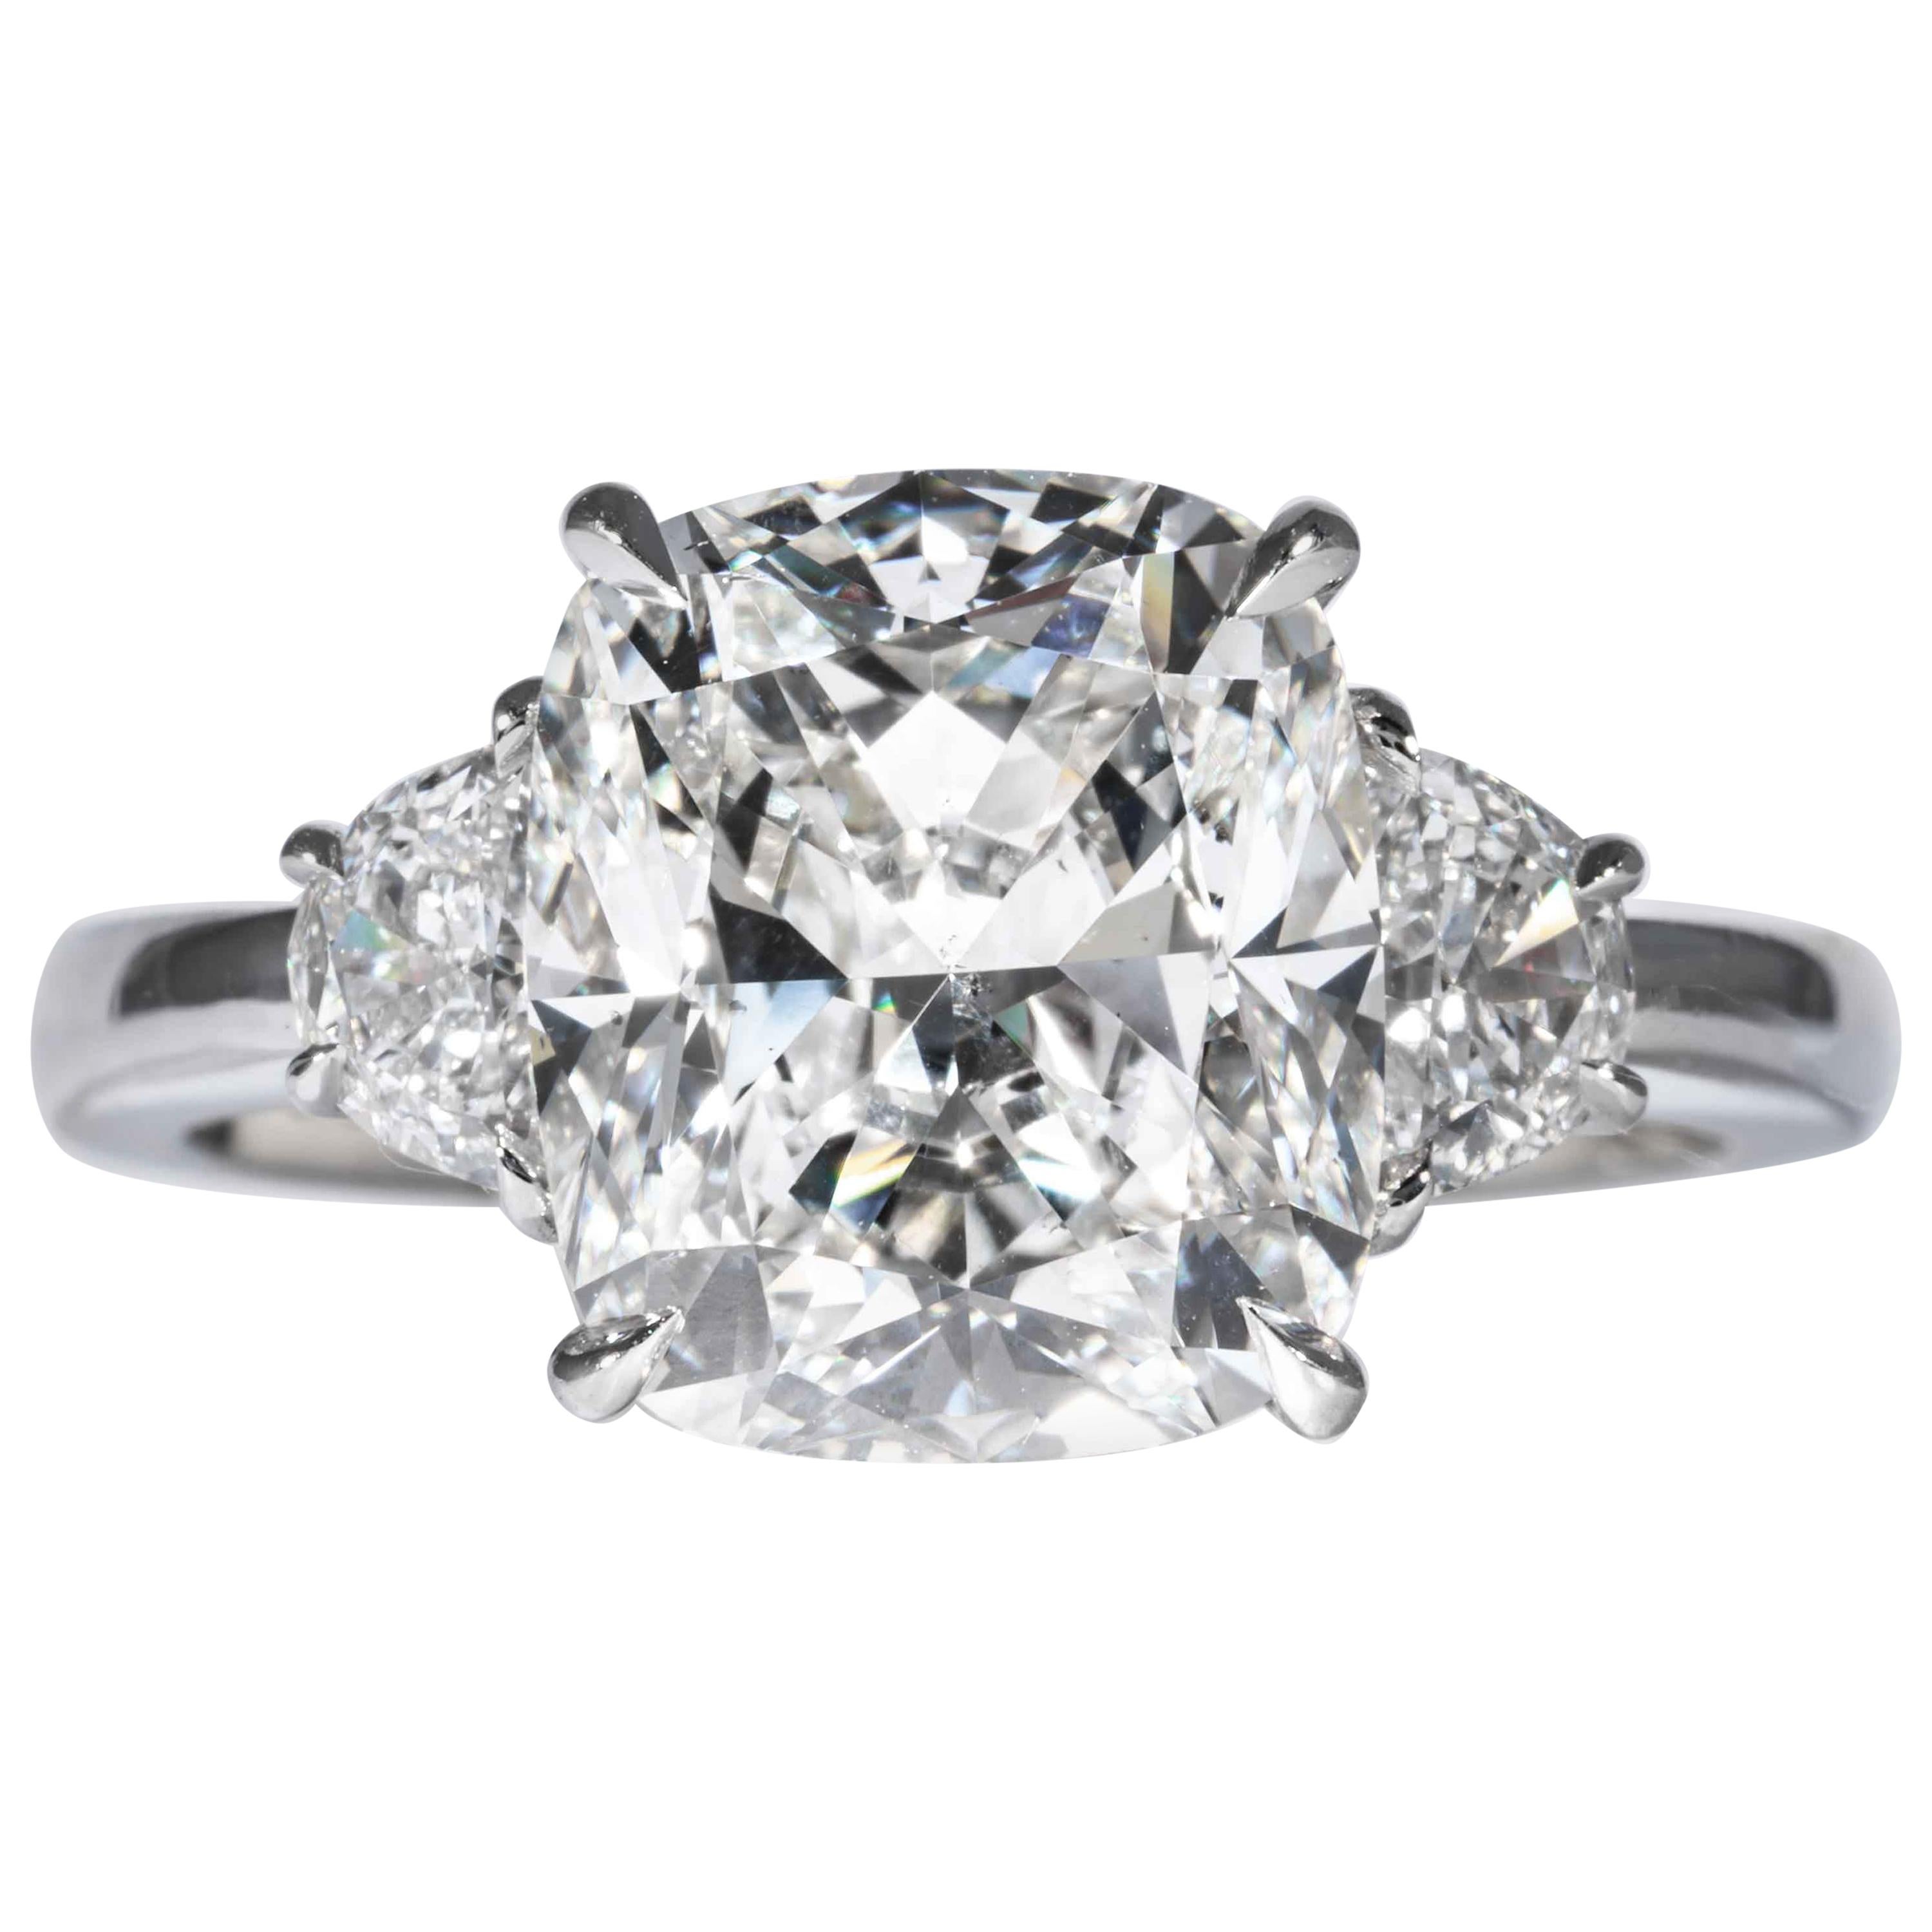 Shreve, Crump & Low GIA Certified 4.10 Carat E SI1 Cushion Cut Diamond Plat Ring